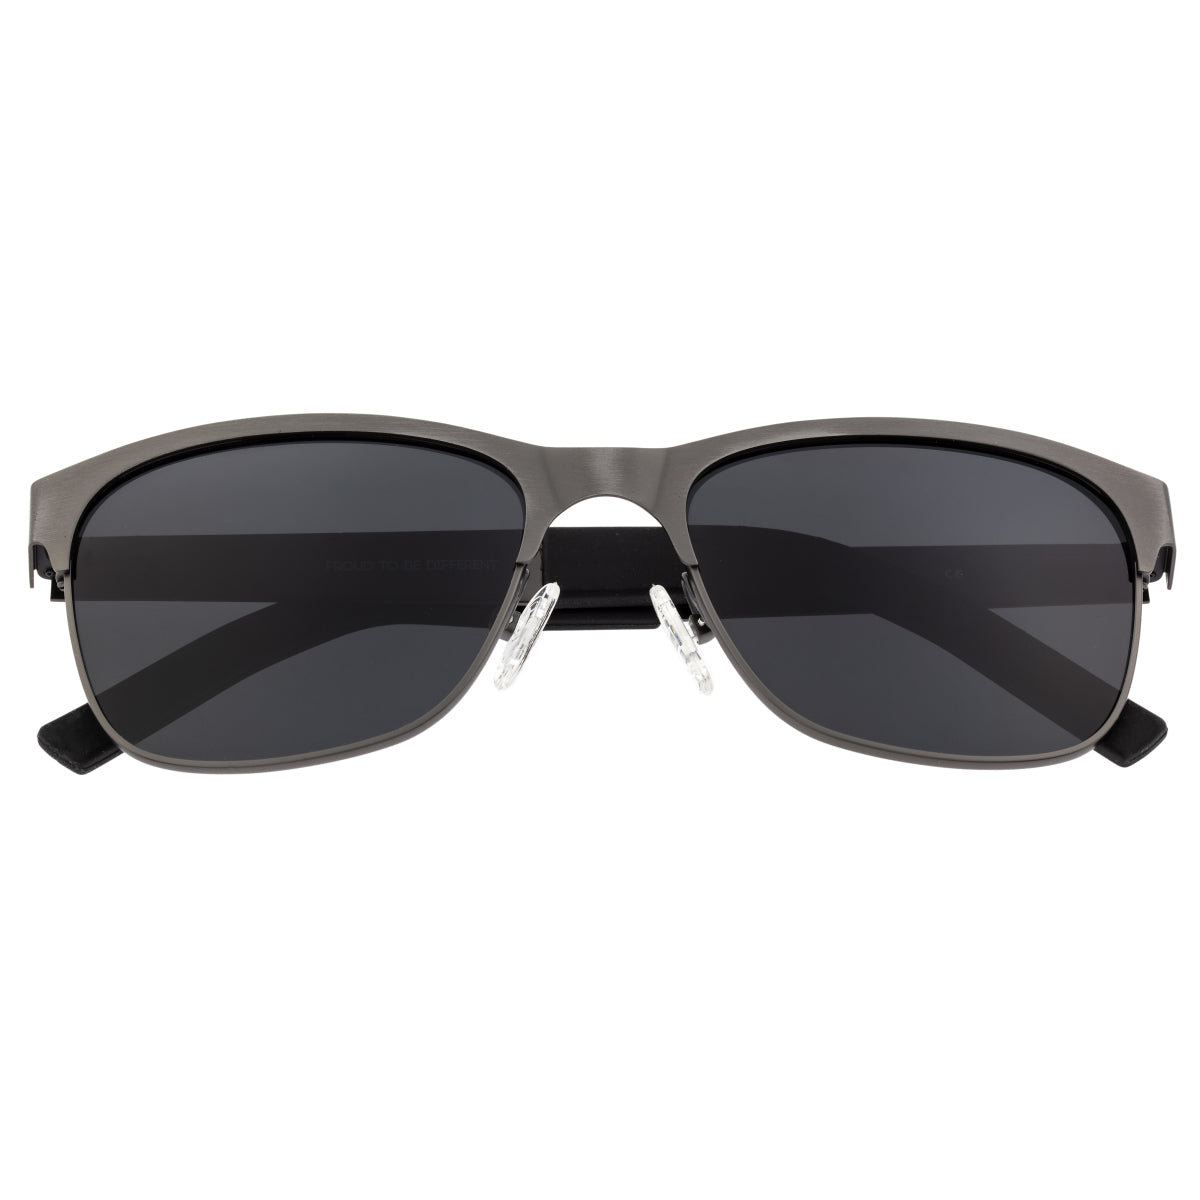 Breed Hypnos Titanium Polarized Sunglasses - Gunmetal/Black - BSG057GY